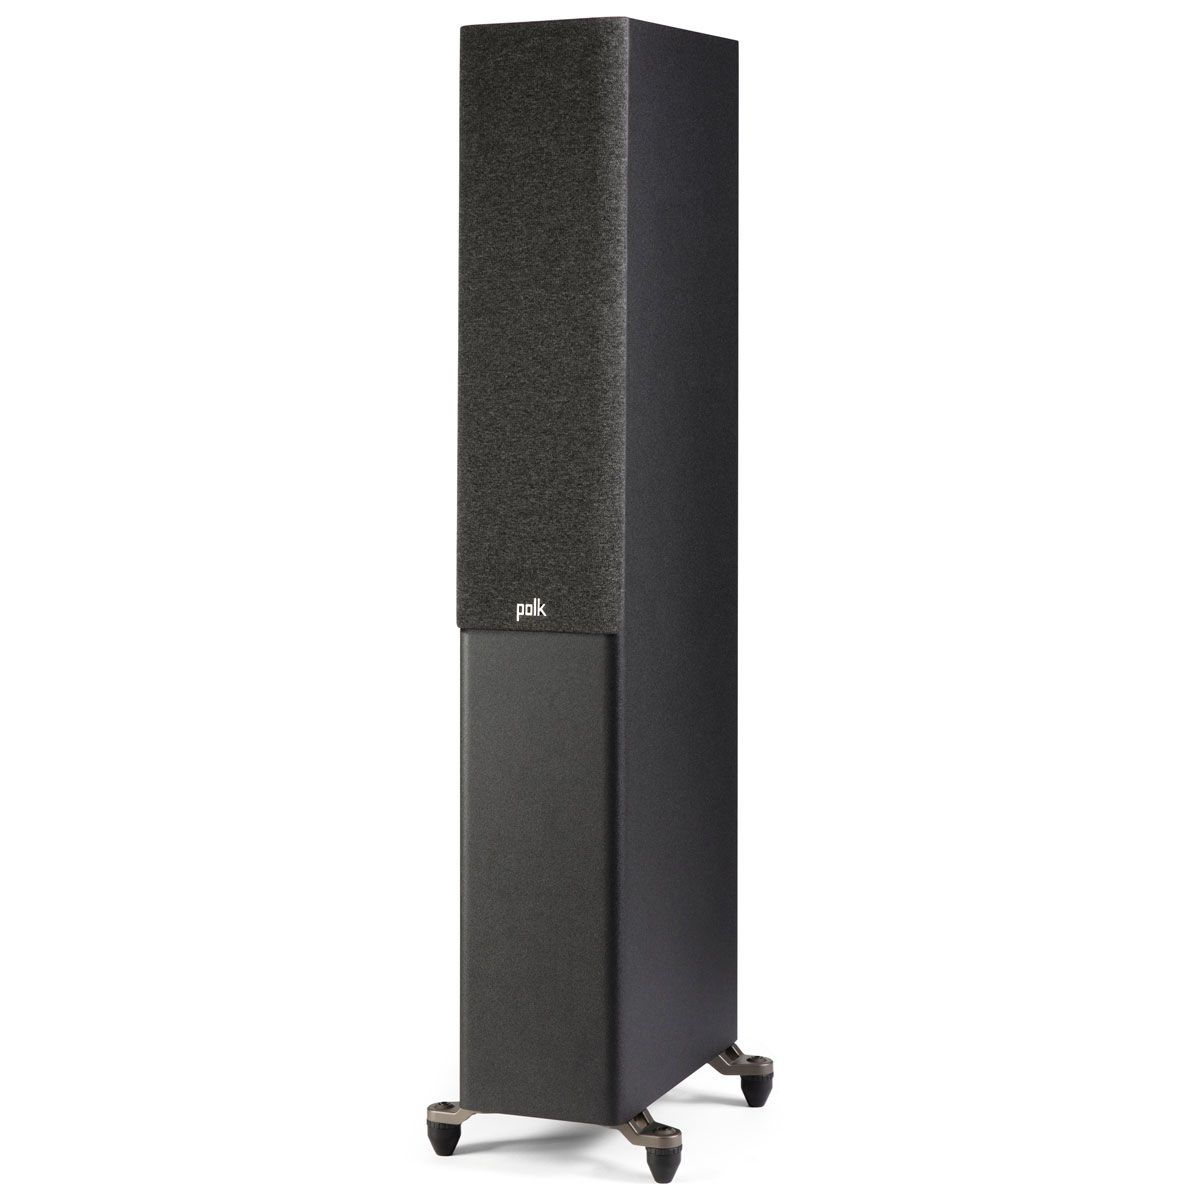 Polk Audio Reference R500 Floorstanding Speaker, Black, front left angle with grille